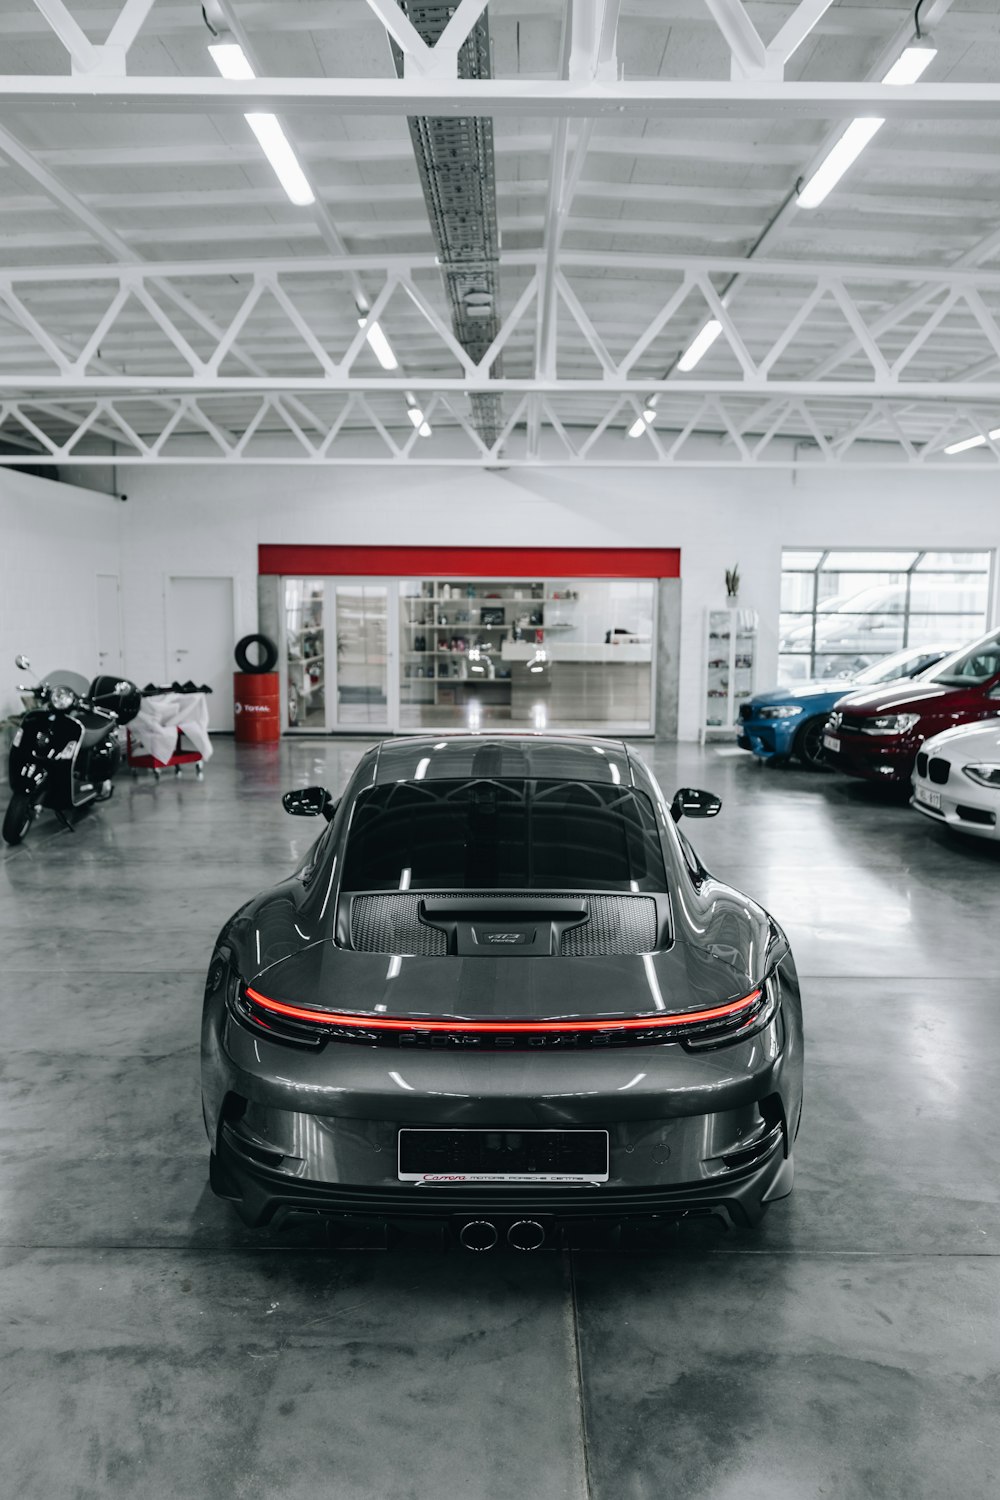 a grey sports car parked in a garage